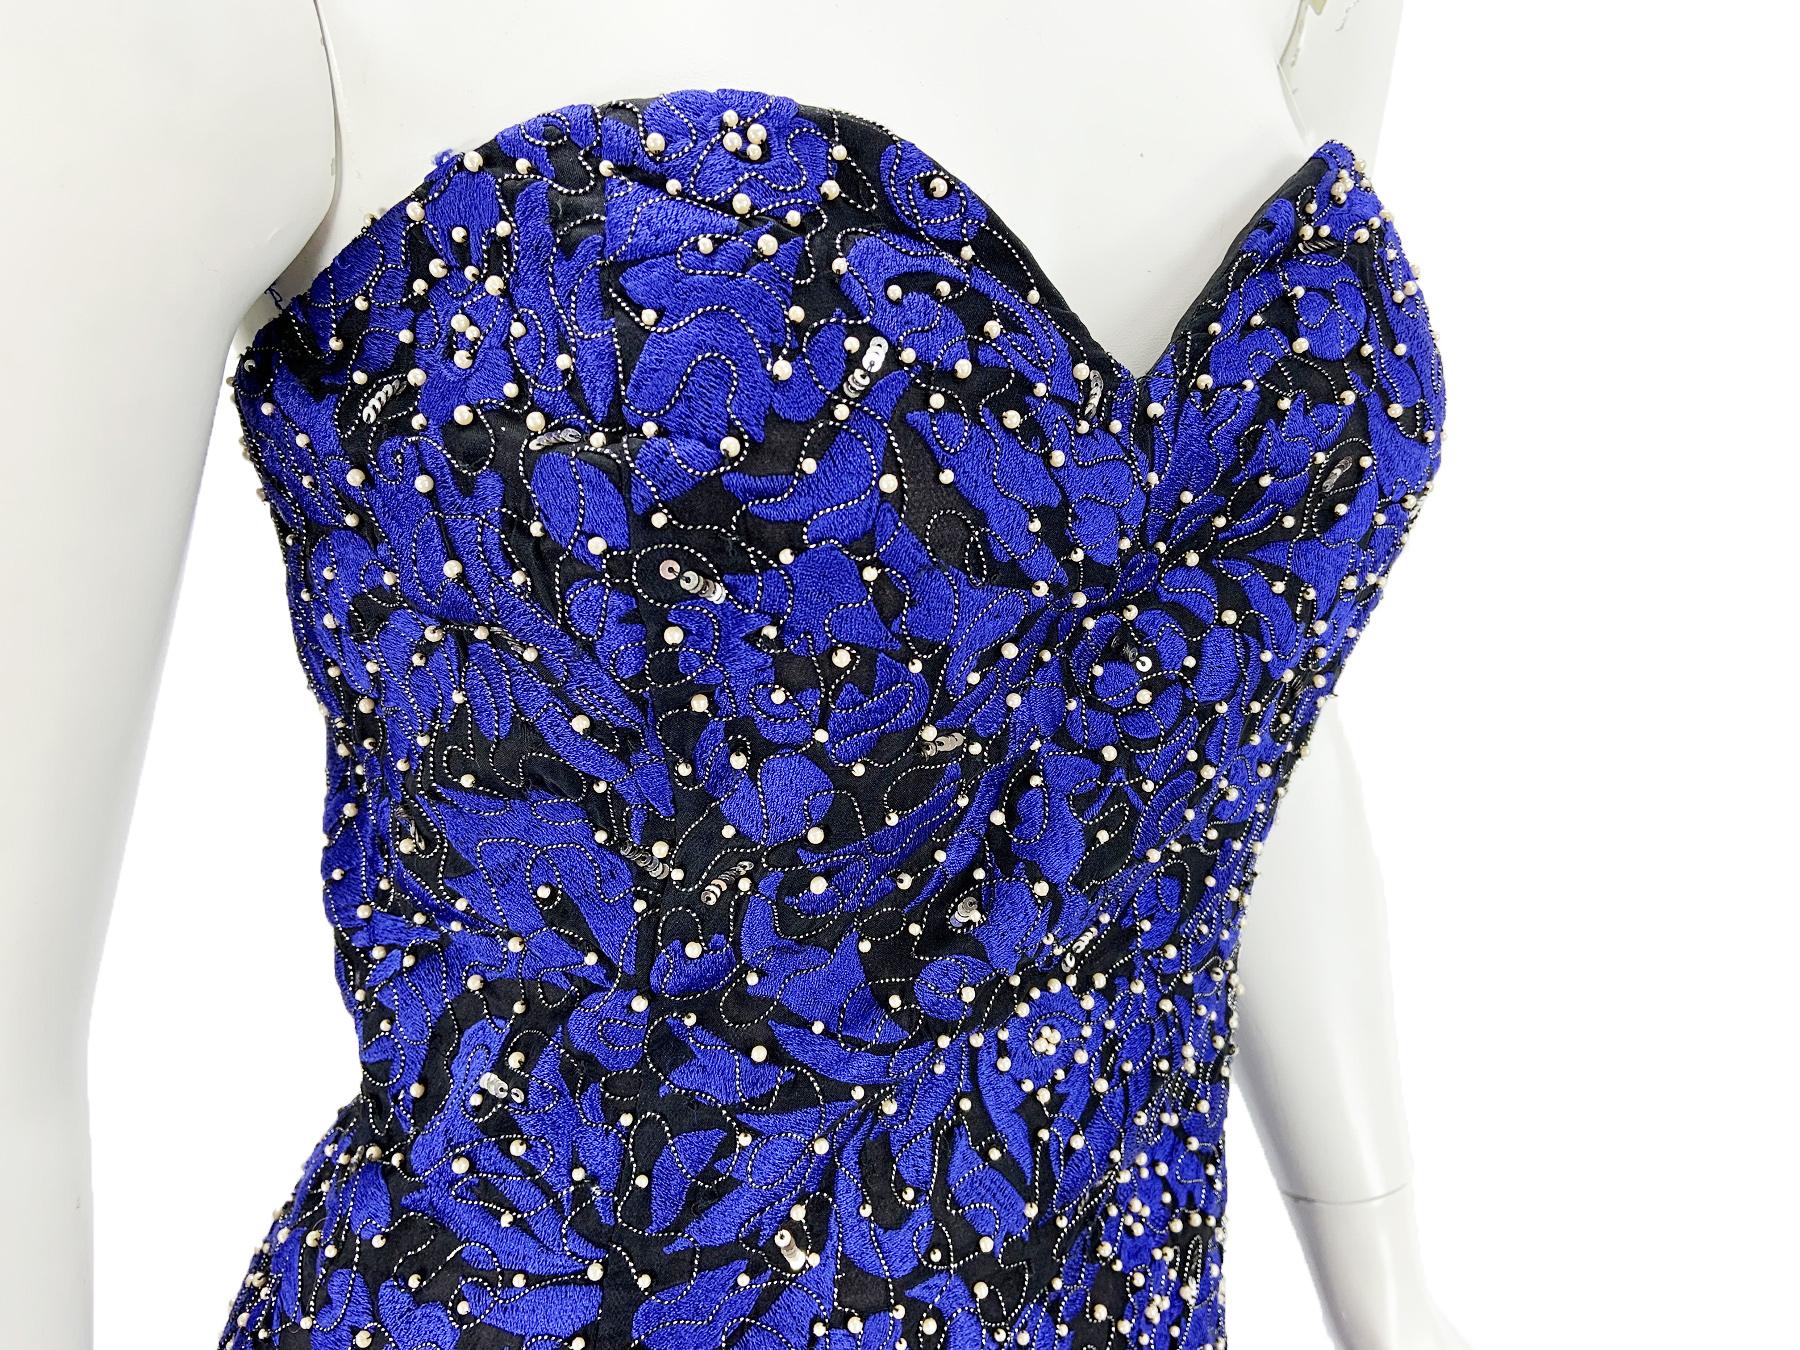 Oscar De La Renta F/W 2014 Blue Black Embroidered Beaded Corset Dress Gown US 4 For Sale 1